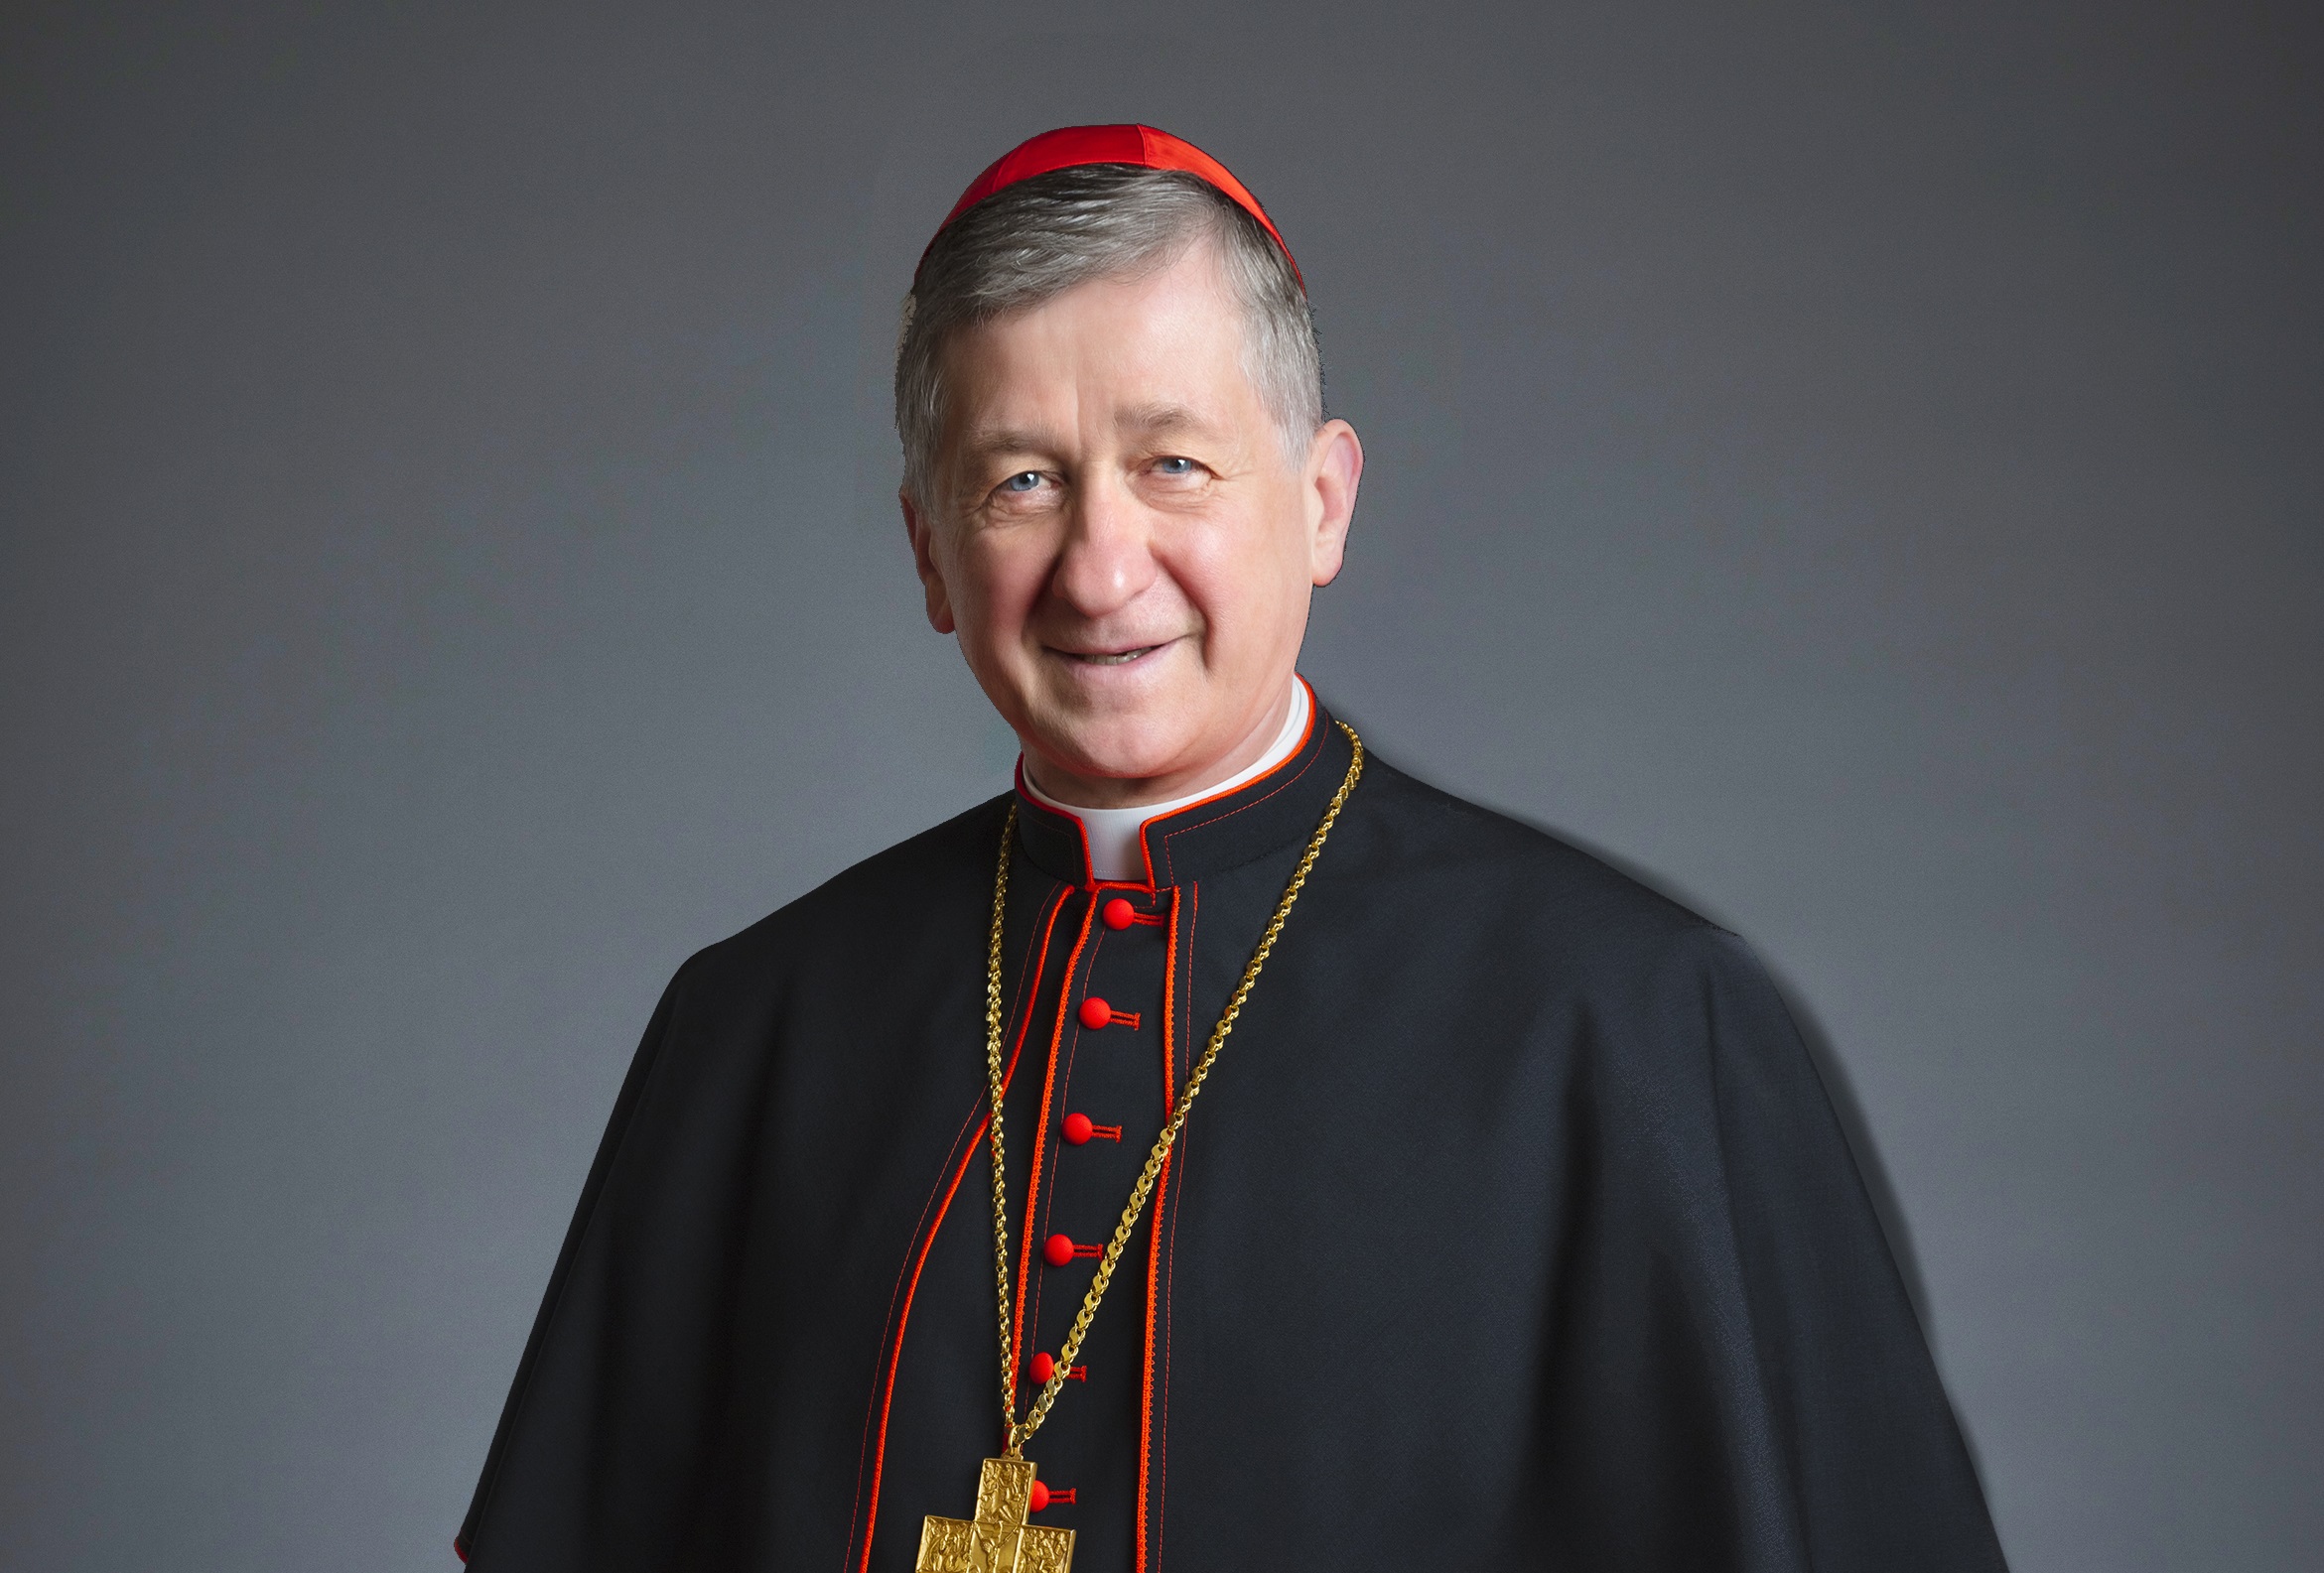 The 2017 Cardinal Bernardin Common Cause Lecture 